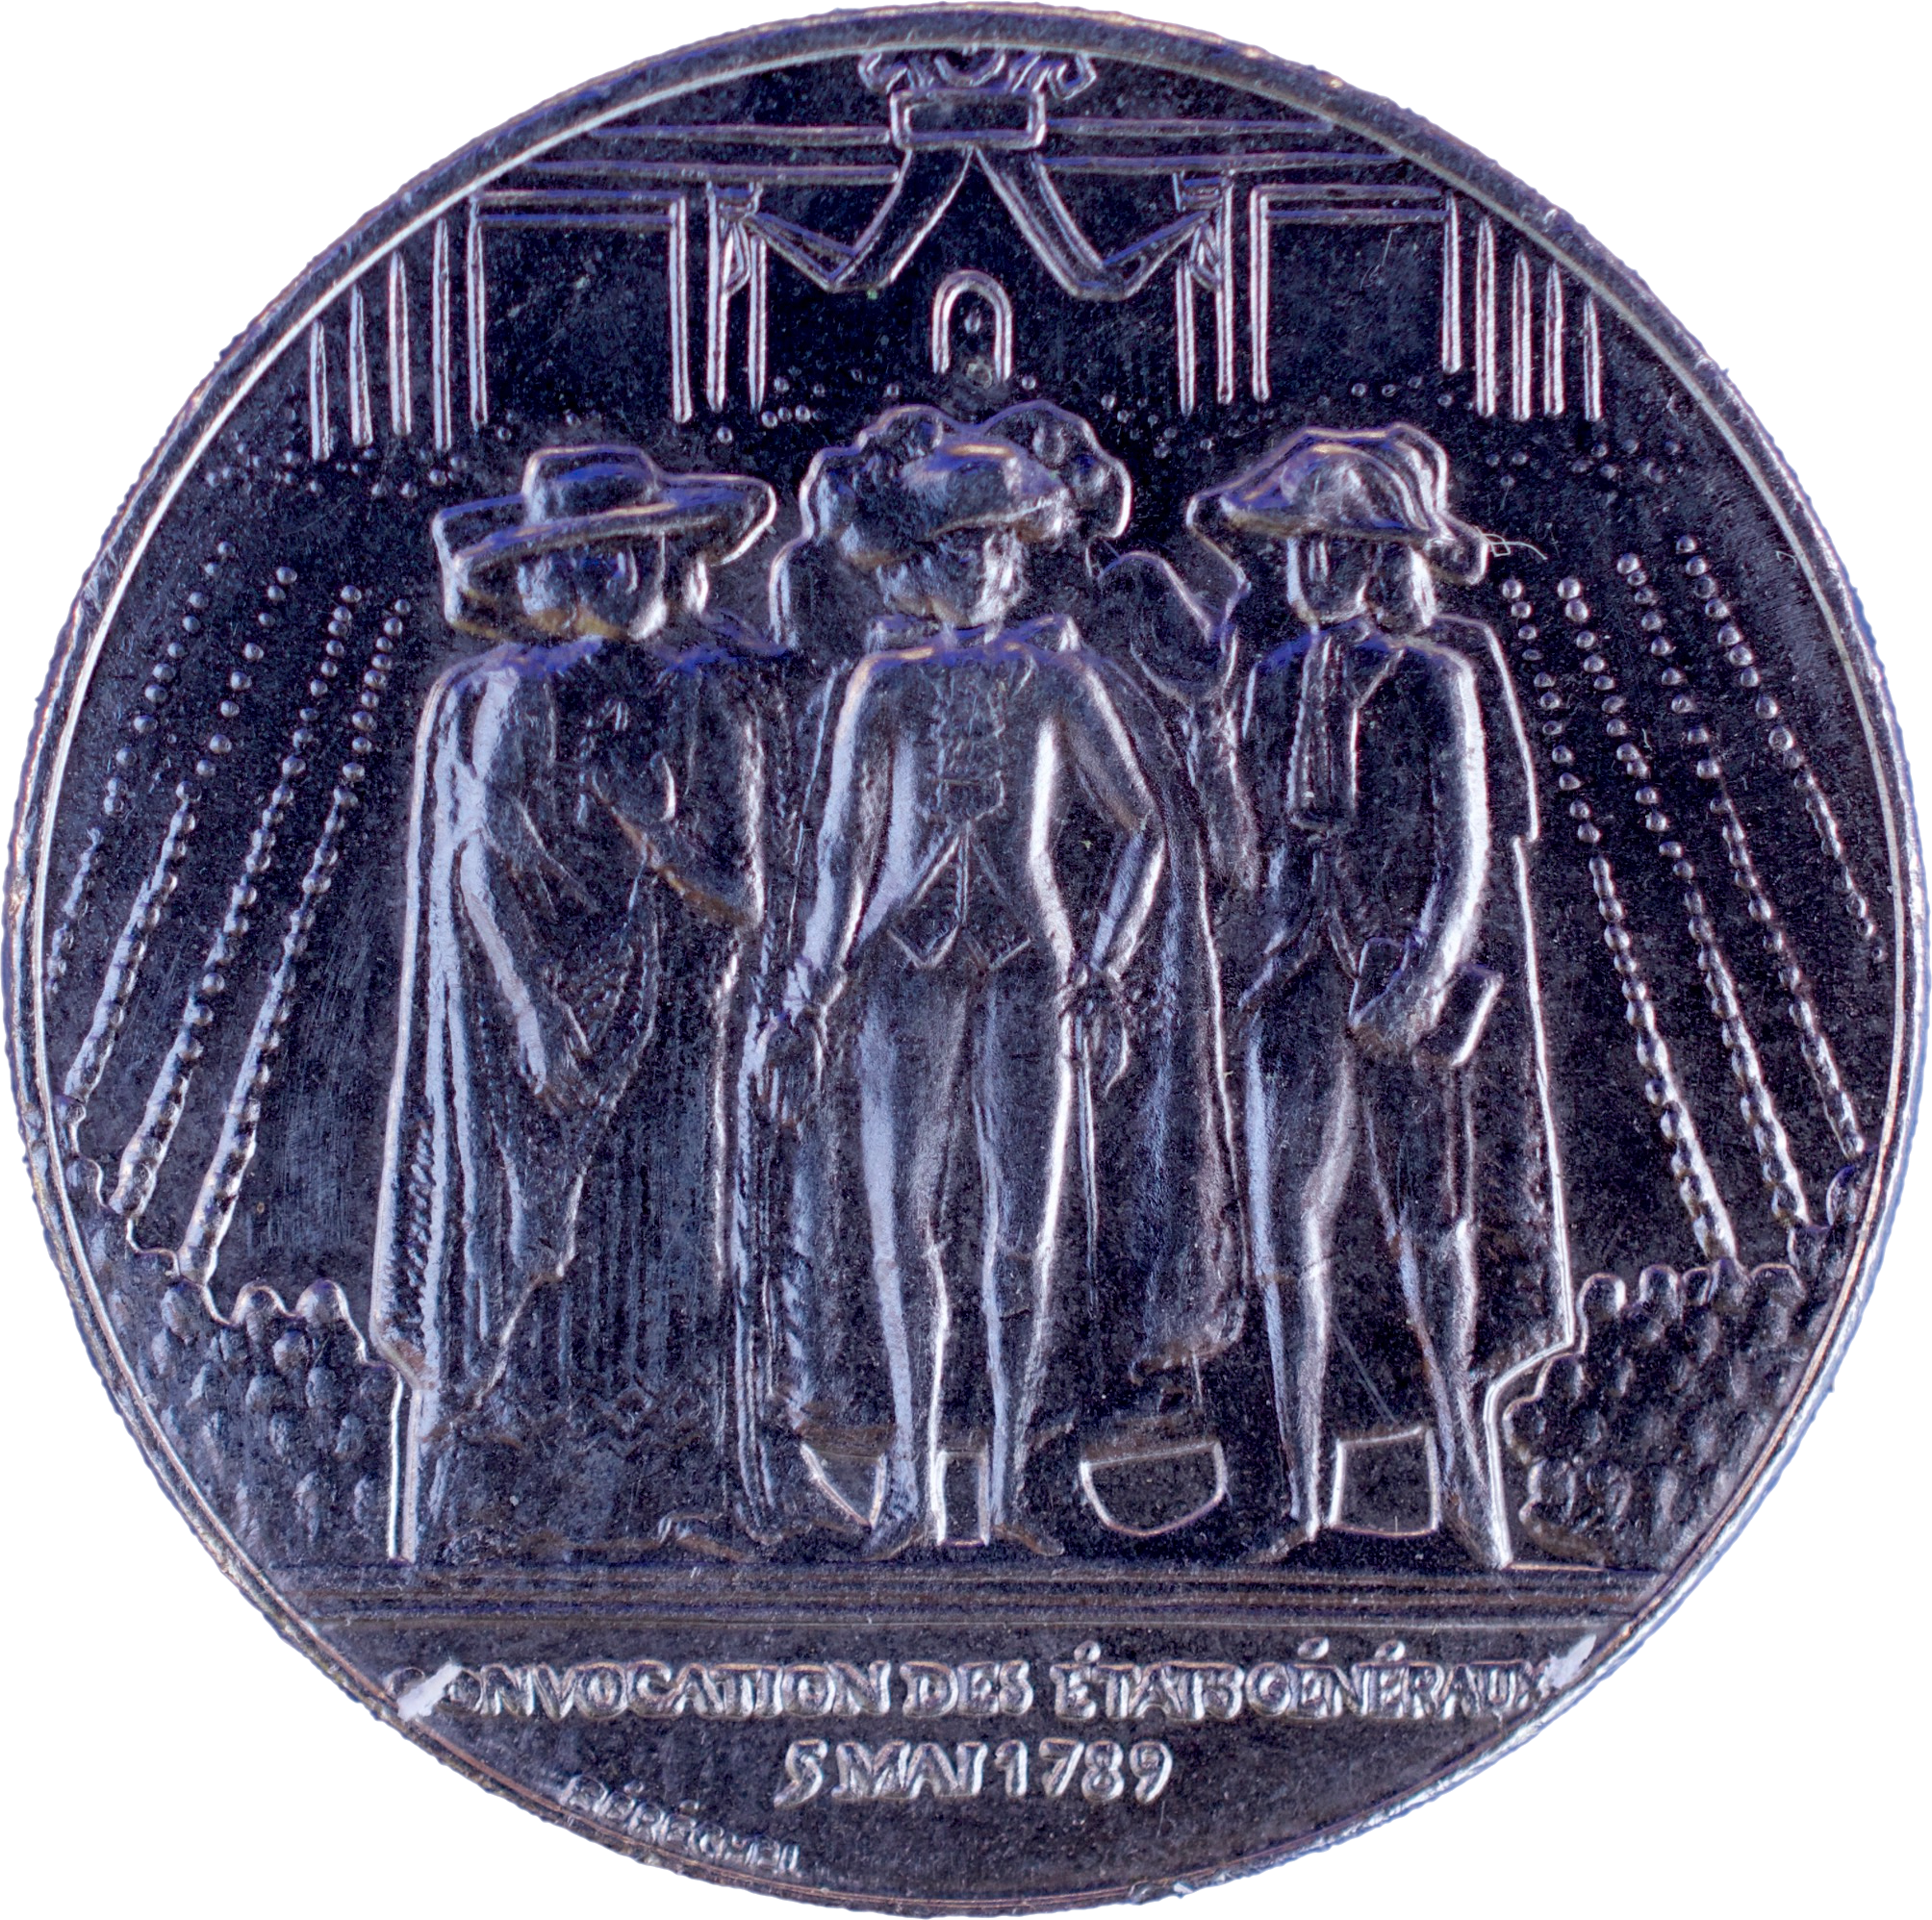 1 franc Etats généraux 1989 droit